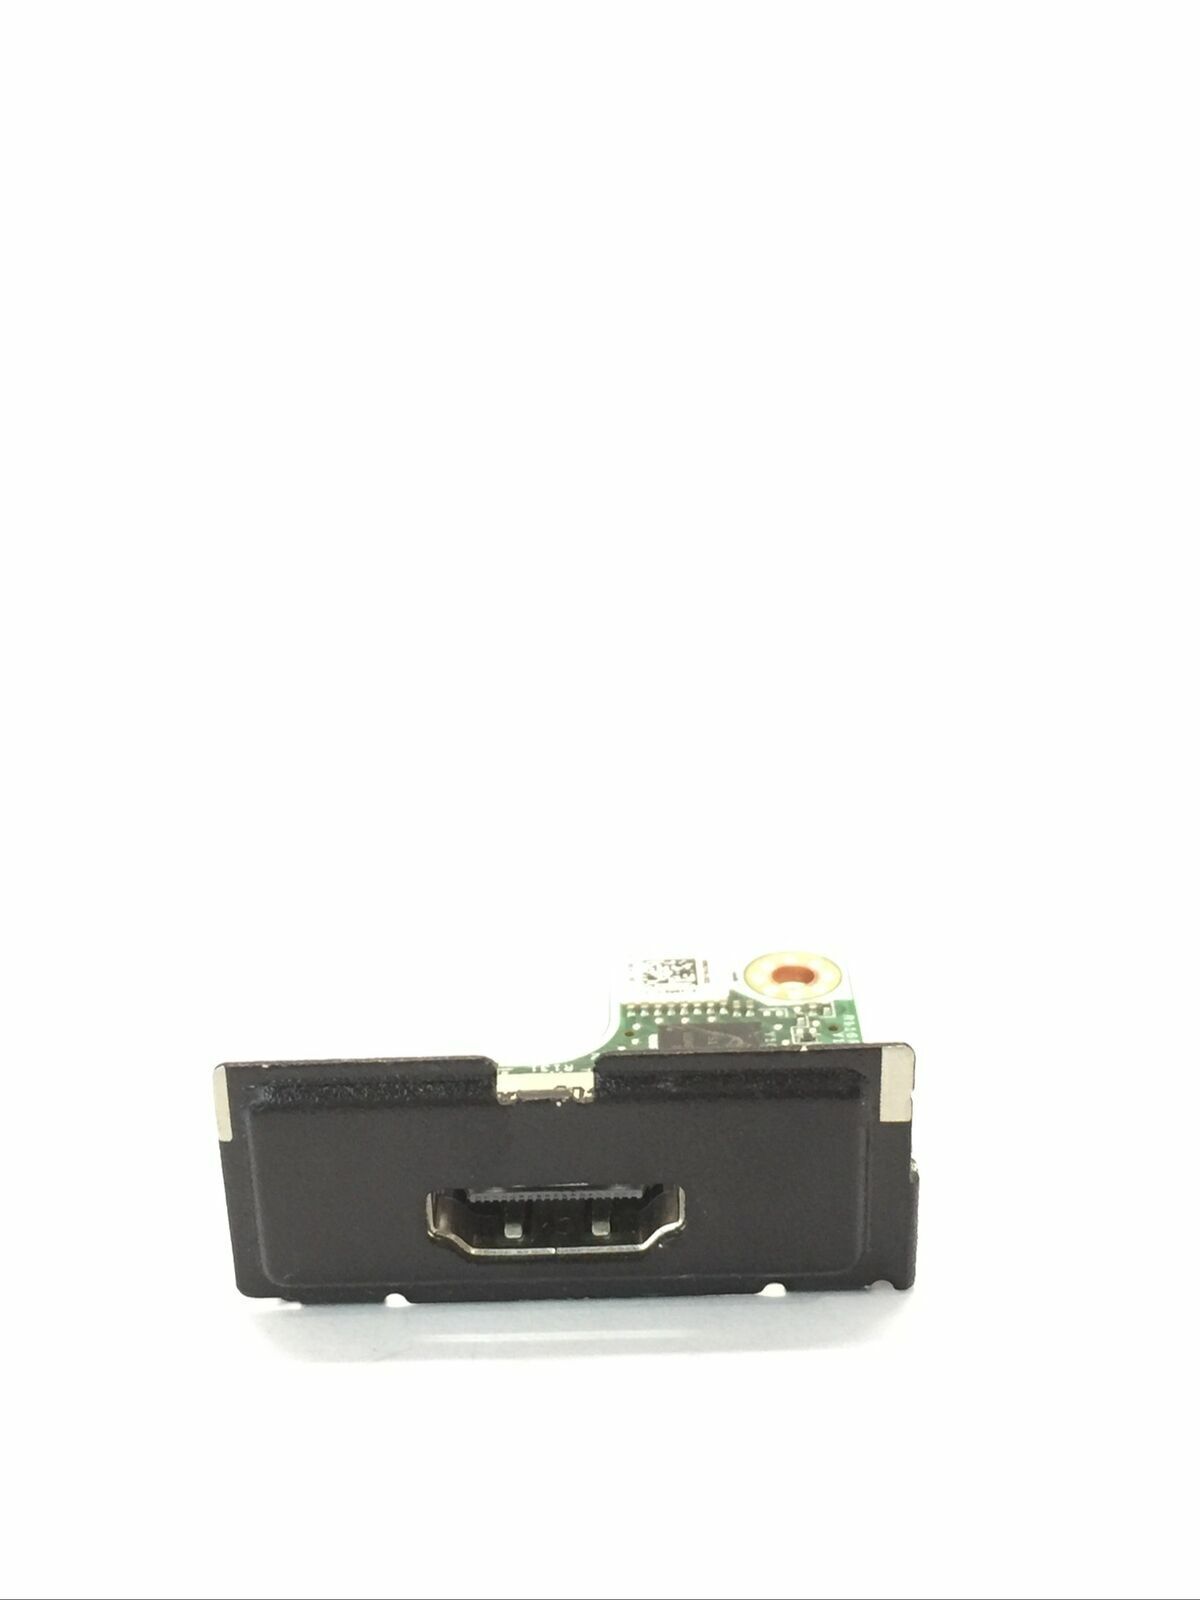 New L25757-001 HP HDMI Port IO Option Card for HP EliteDesk 705 G4 3TK75AA